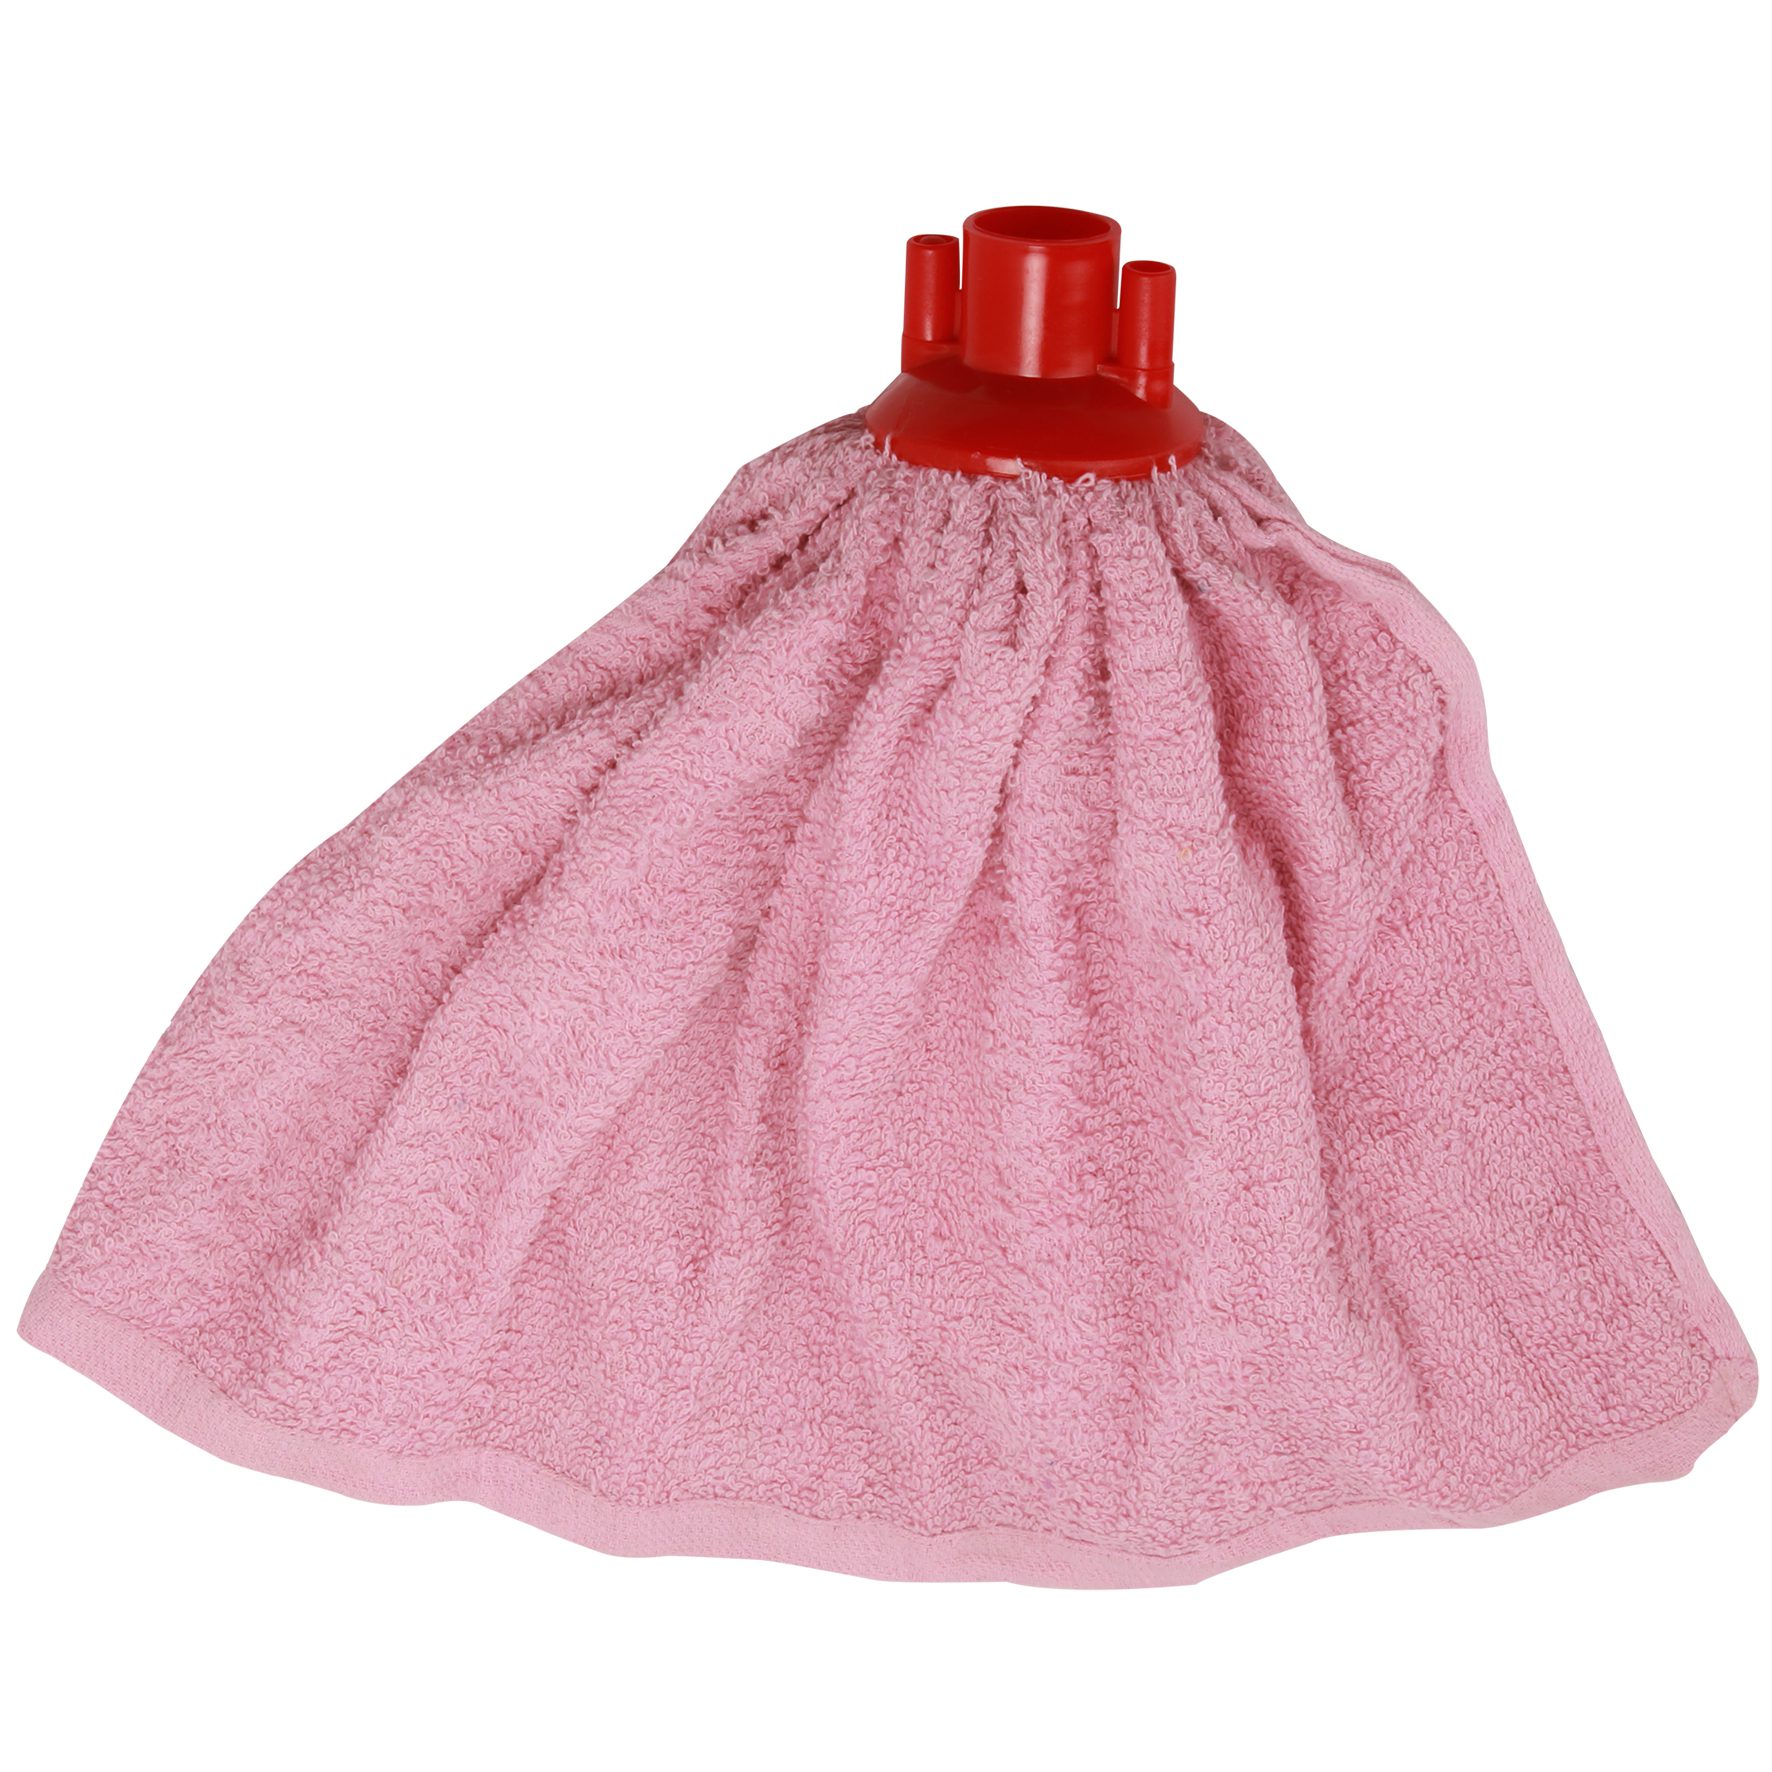 Household "skirt" type, sponge clothe mop, 100% cotton